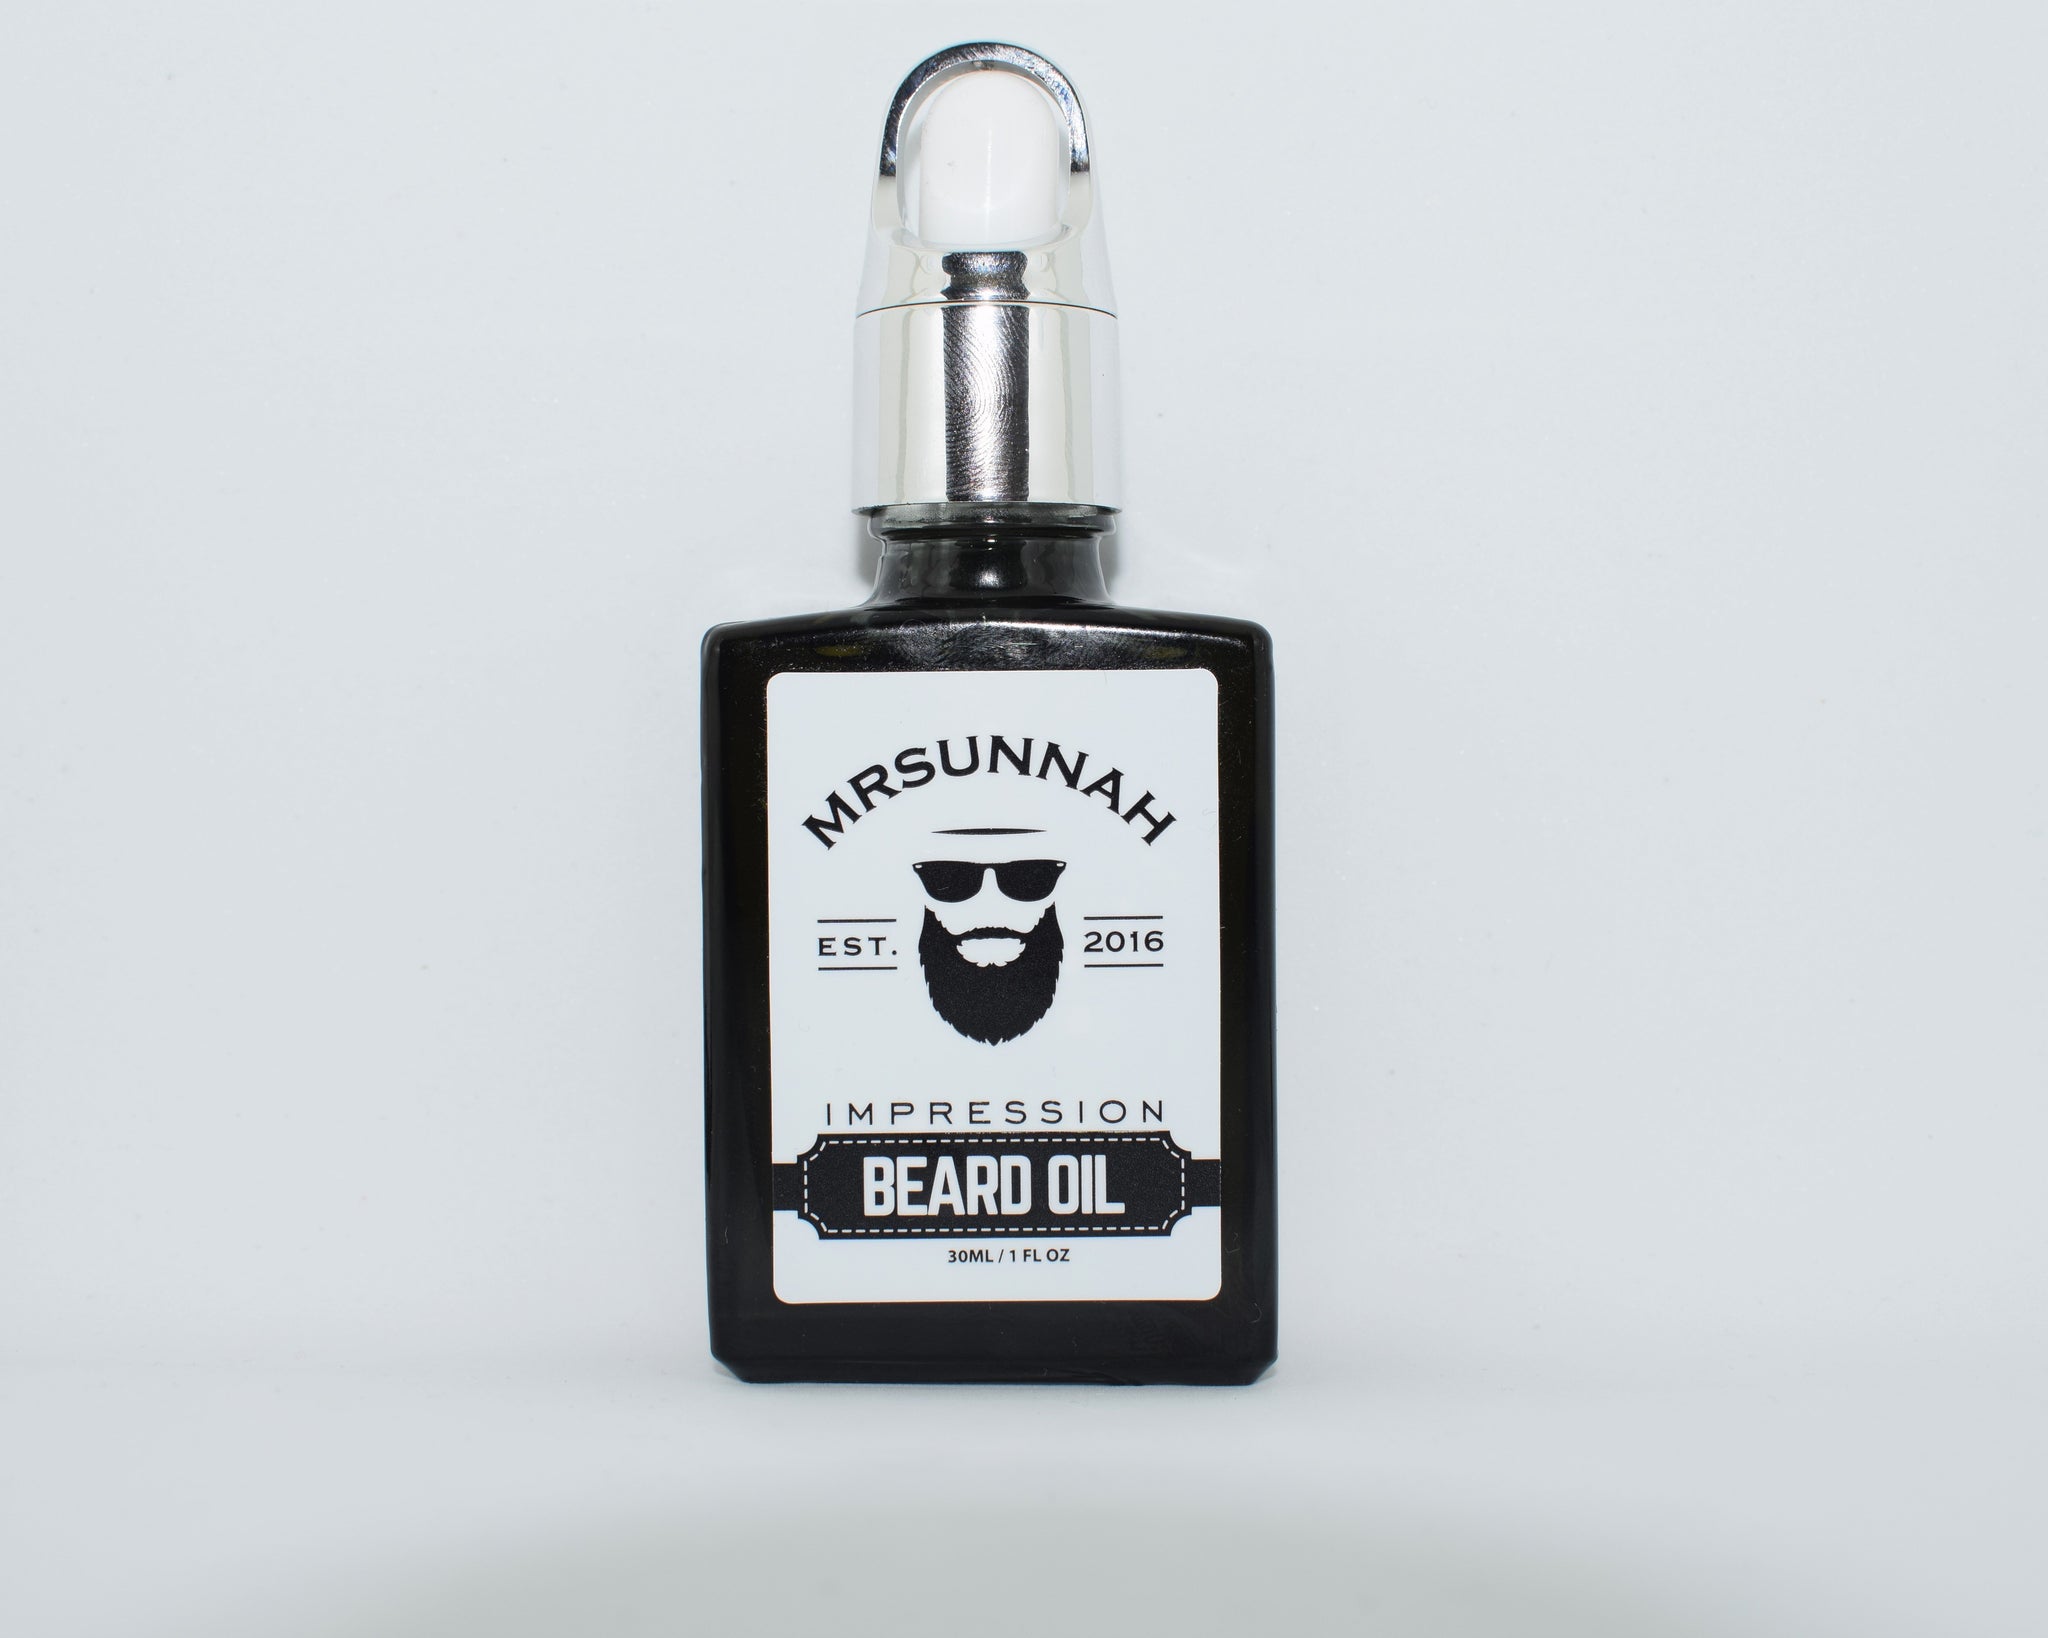 Impression Beard Oil (30ml) - Mrsunnah Grooming Co 